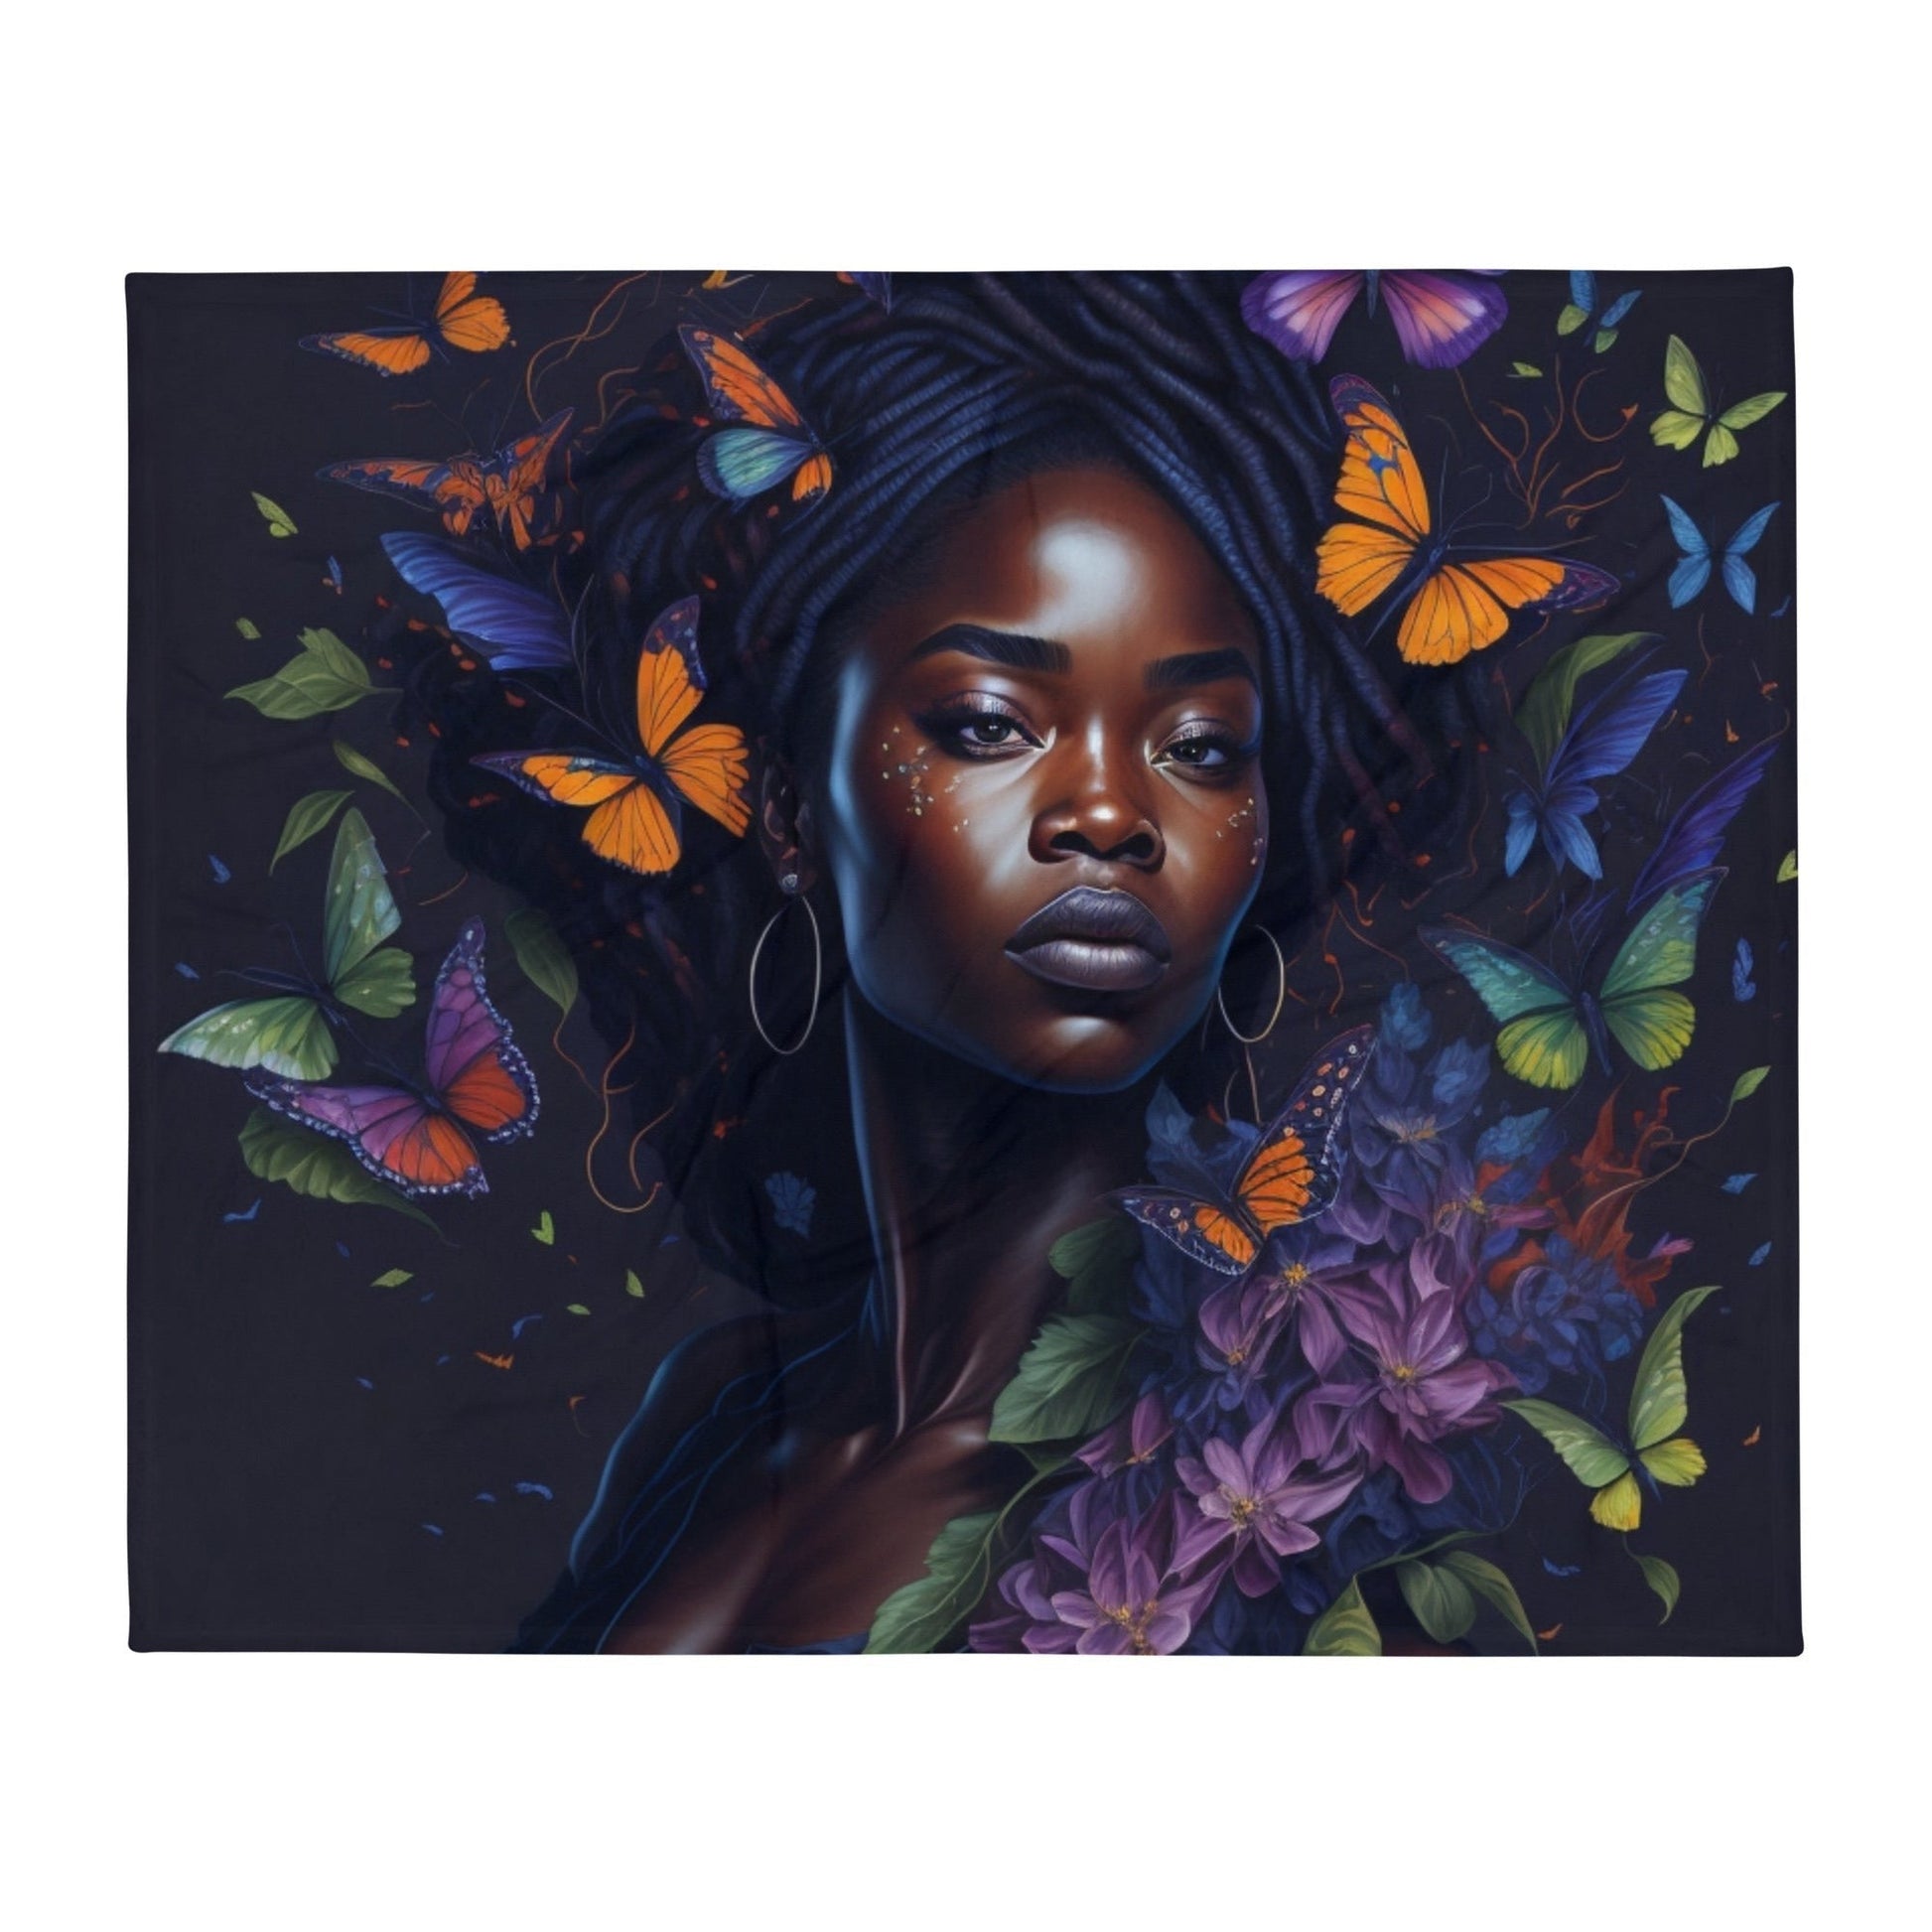 Graceful Wings: Portrait of an African American Woman with Fluttering Butterflies Throw Blanket-THROW BLANKET-50″×60″-Infinite Splendor-mysticalcherry